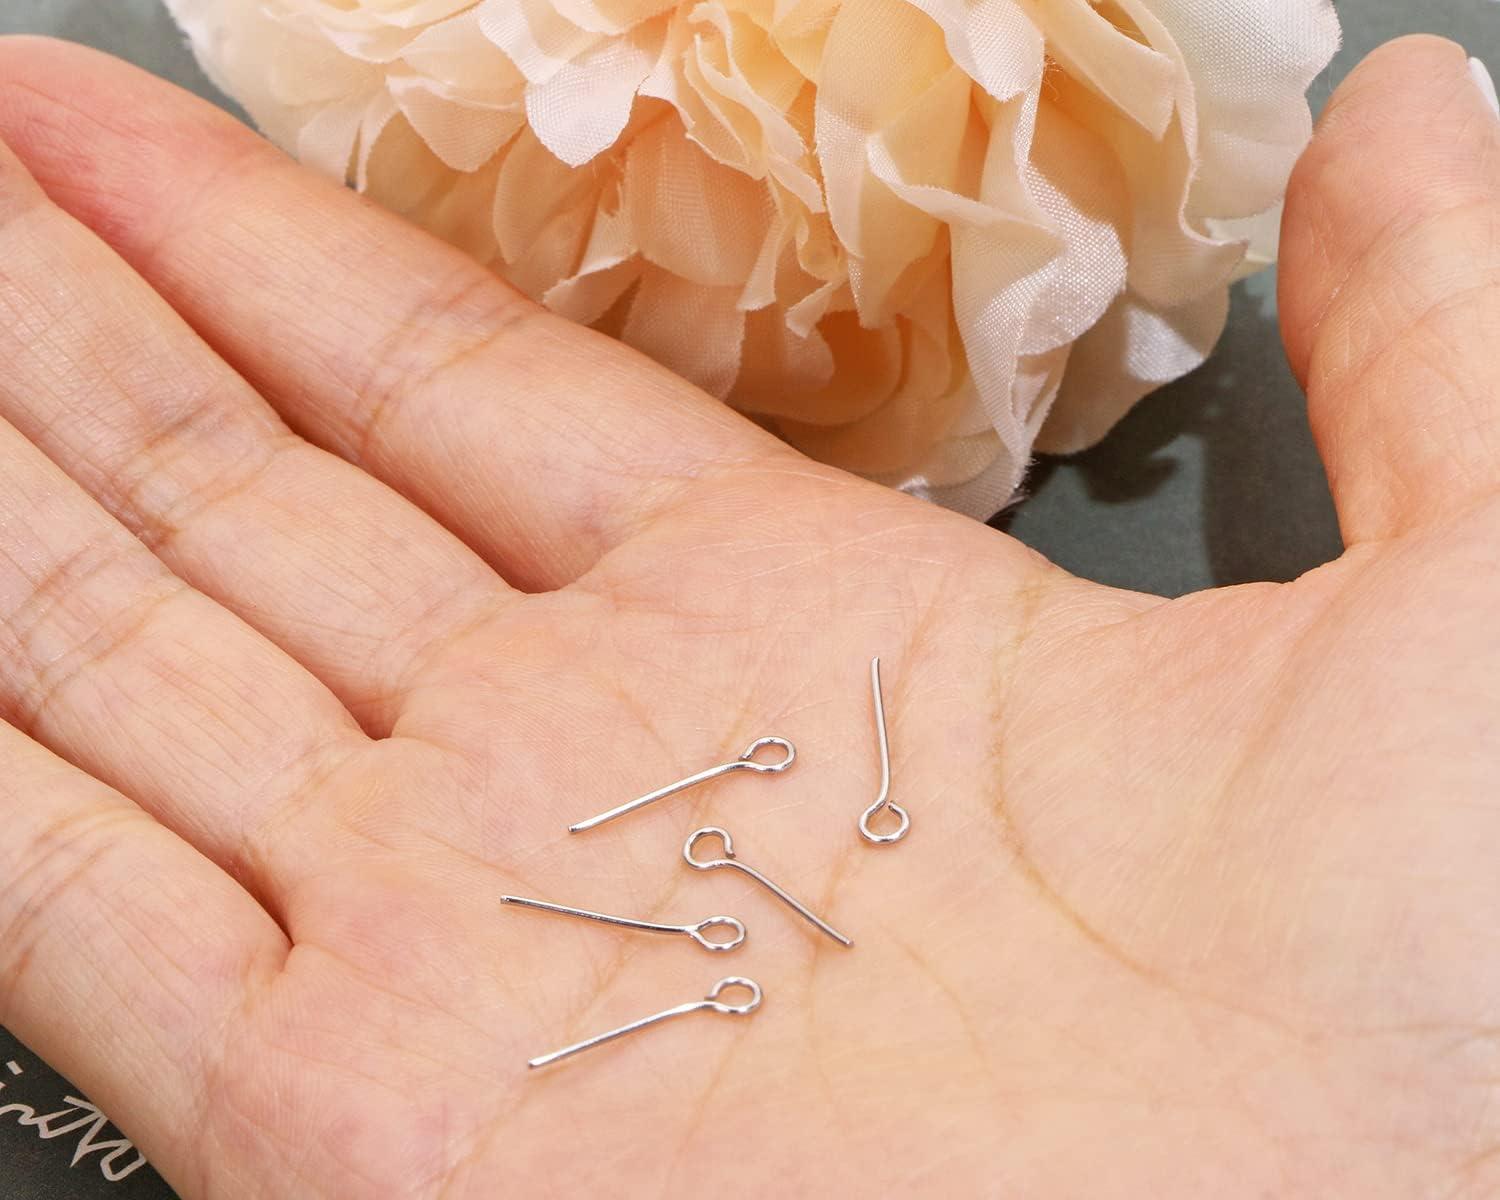 Shapenty 200PCS Mini Metal Wire Eyepins Beading Small Open Eye Head Pins  Needles Bulk for DIY Craft Bead Earring Pendant Necklace Bracelet Jewelry